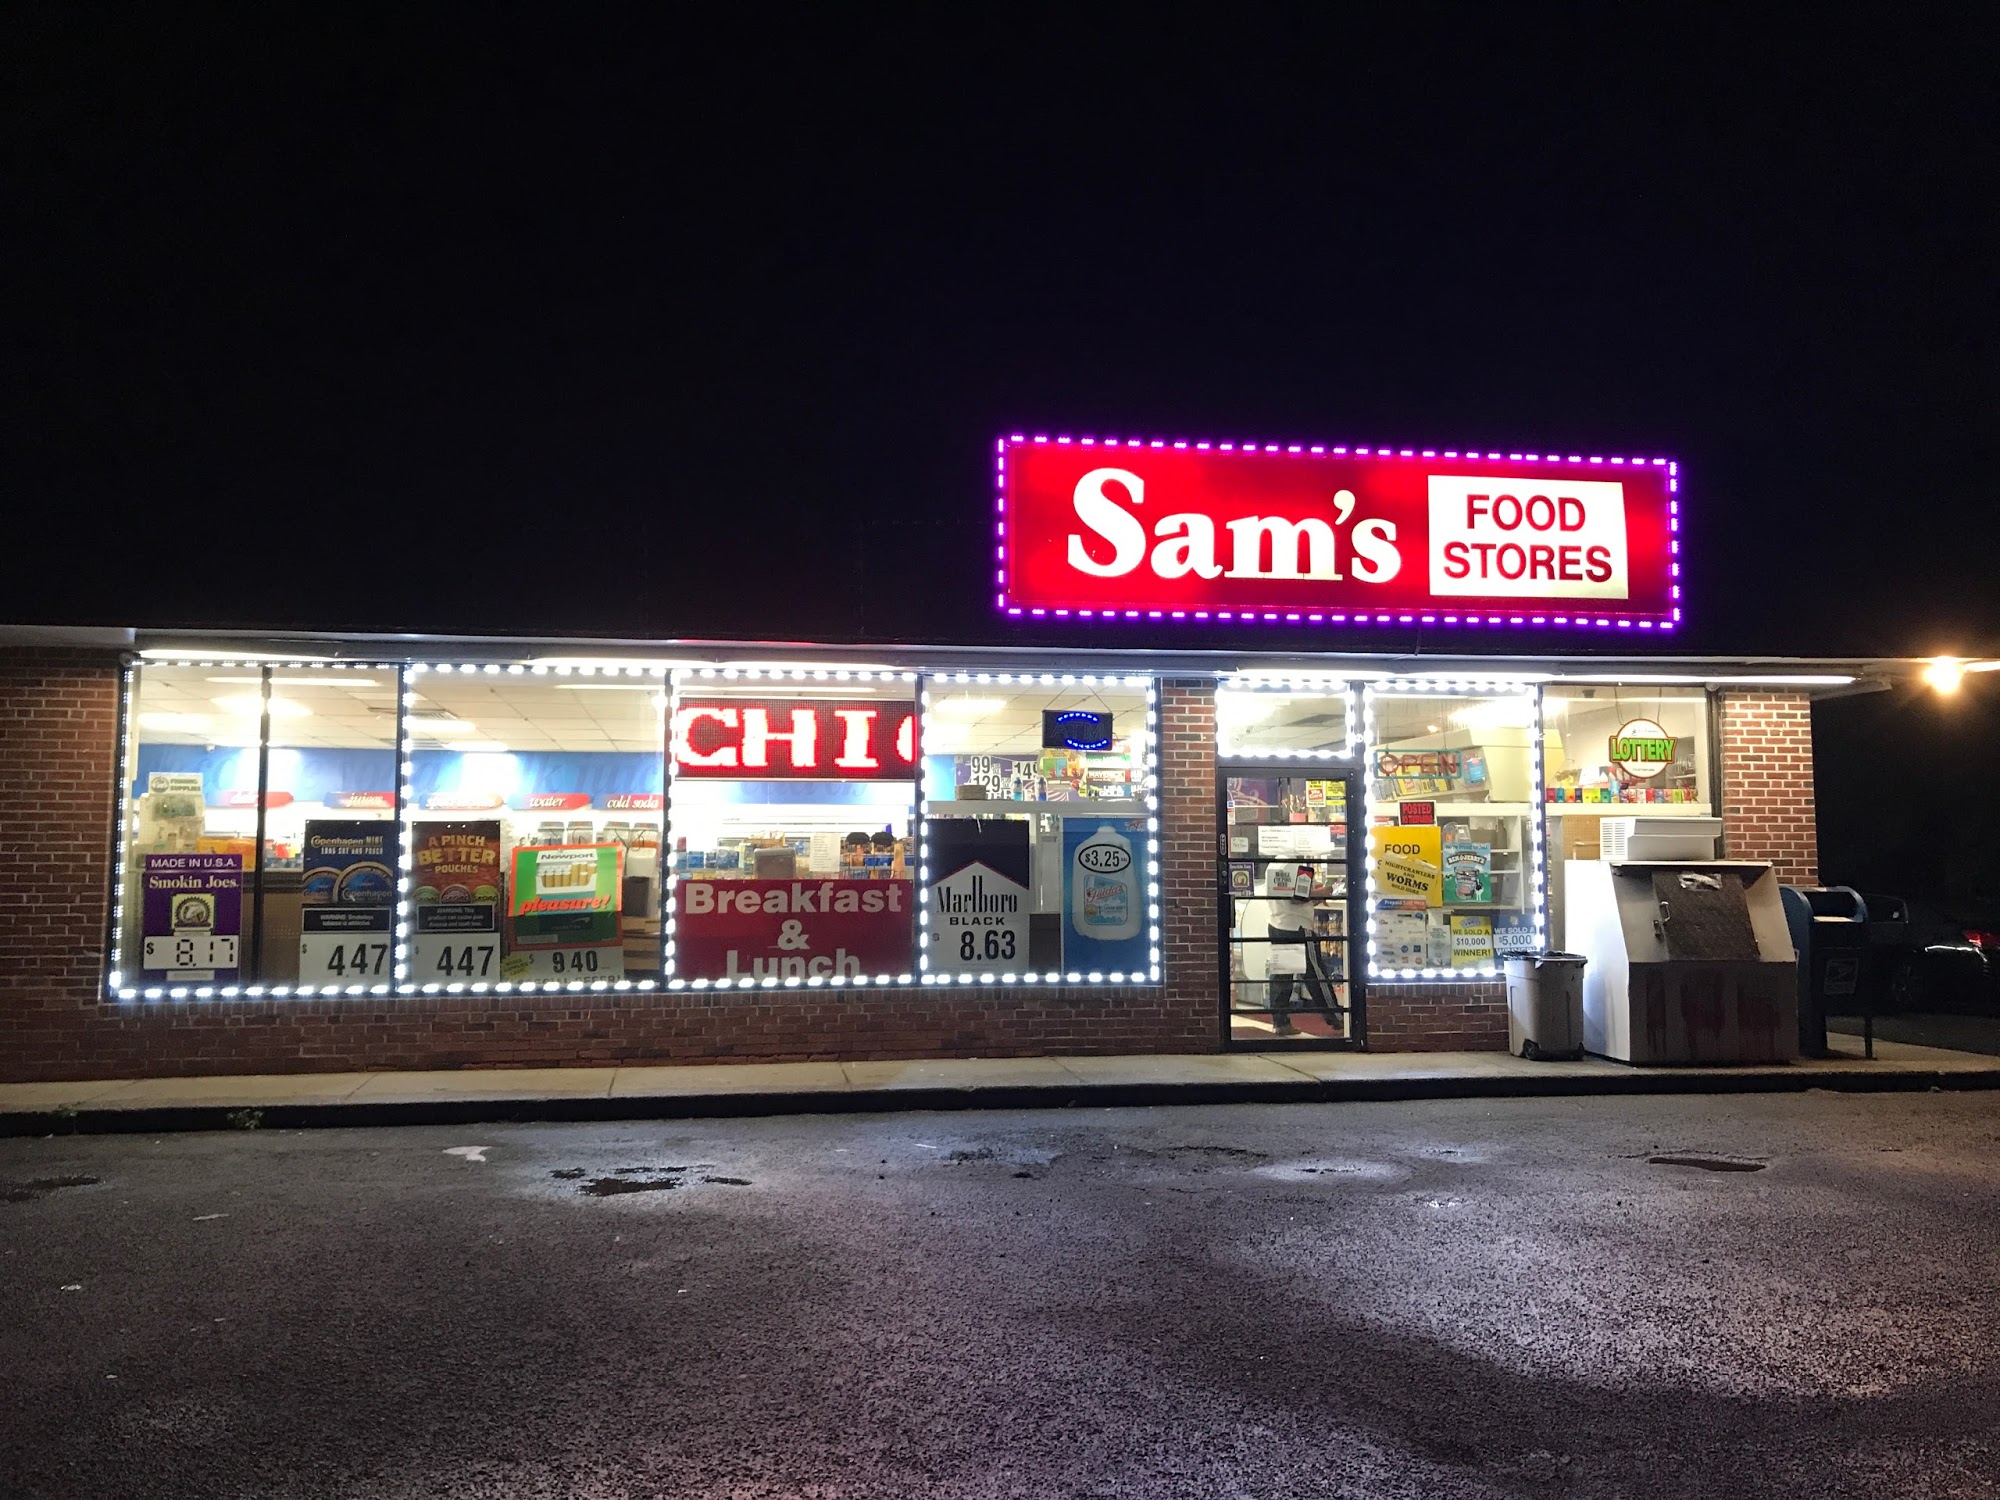 Sam's Food Stores Enfield, Smoke Shop, Vape Shop, Grocery Store